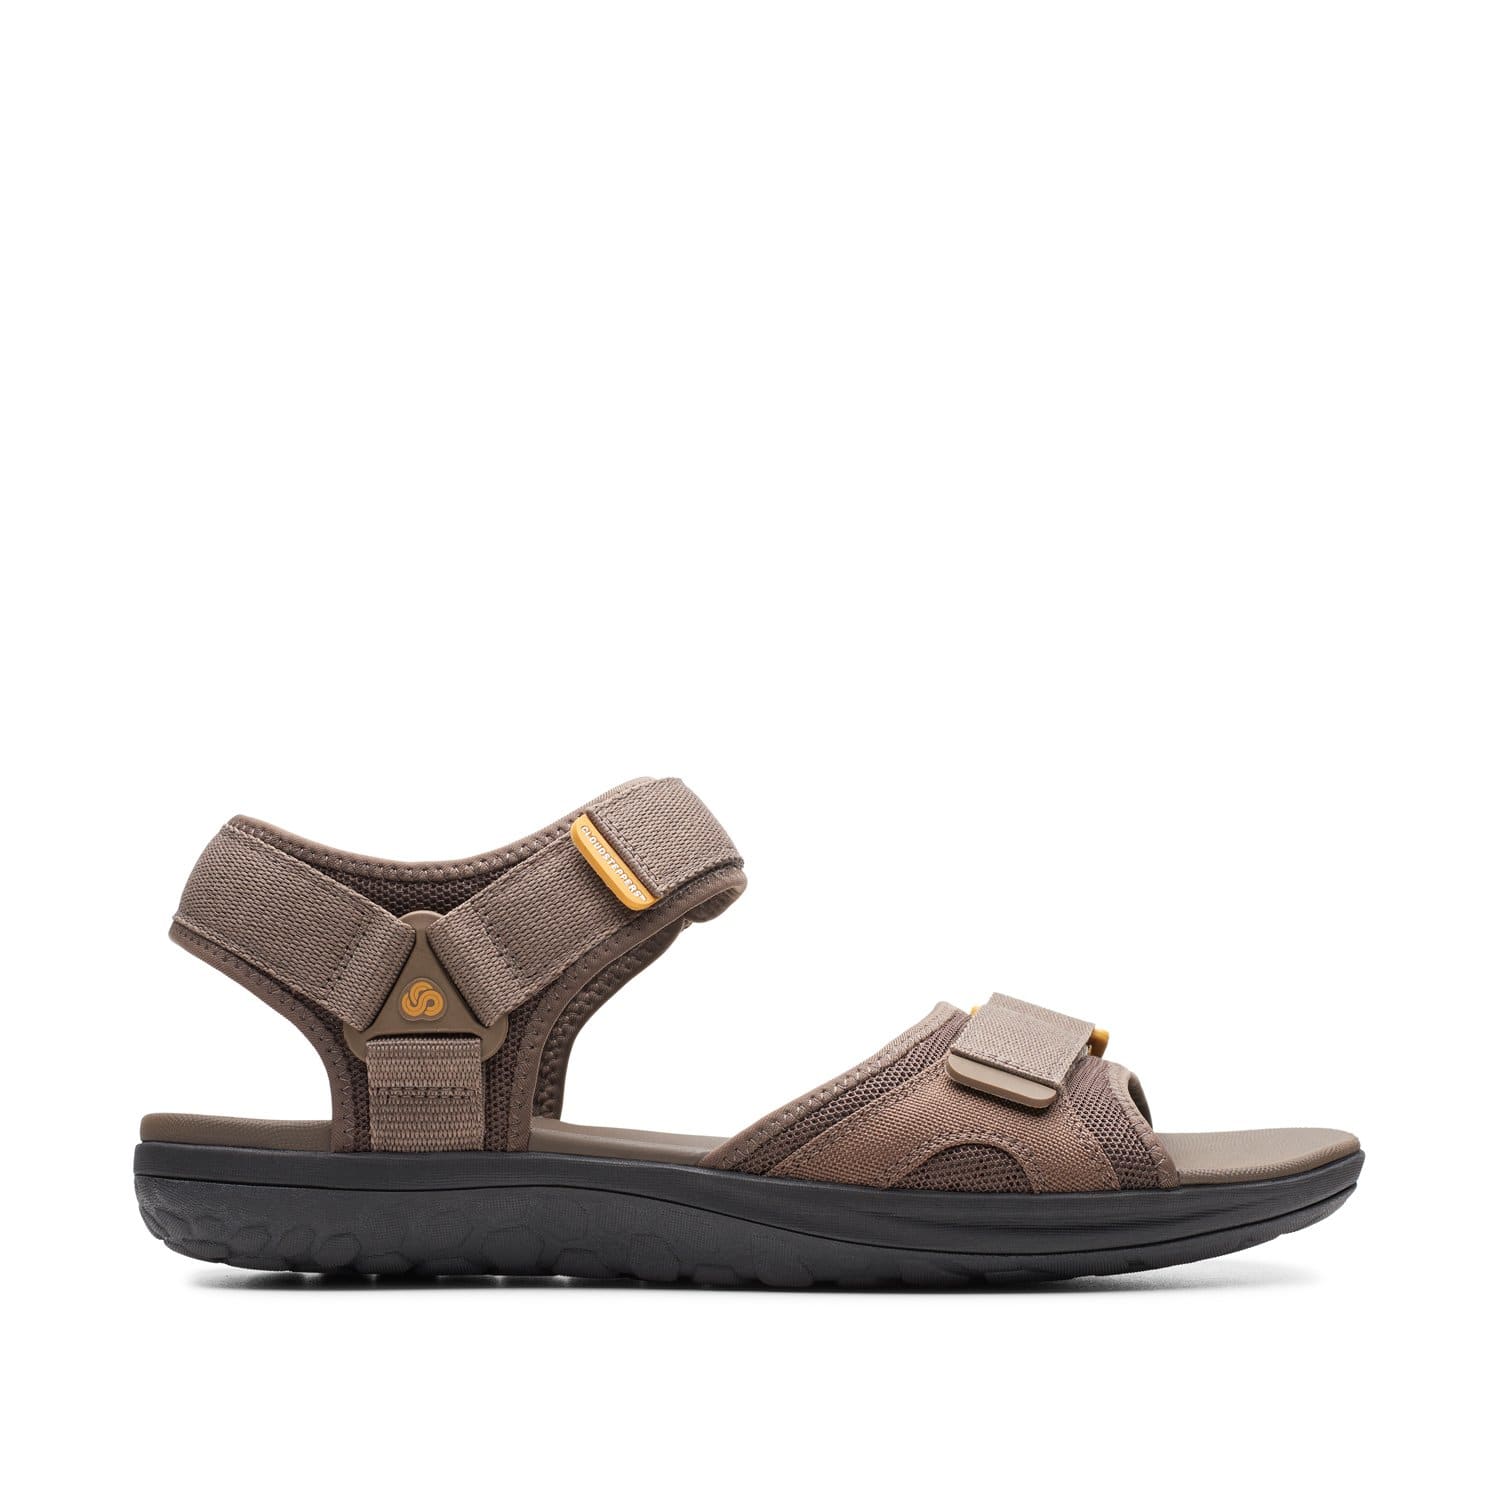 clarks sunbeat sandals tan